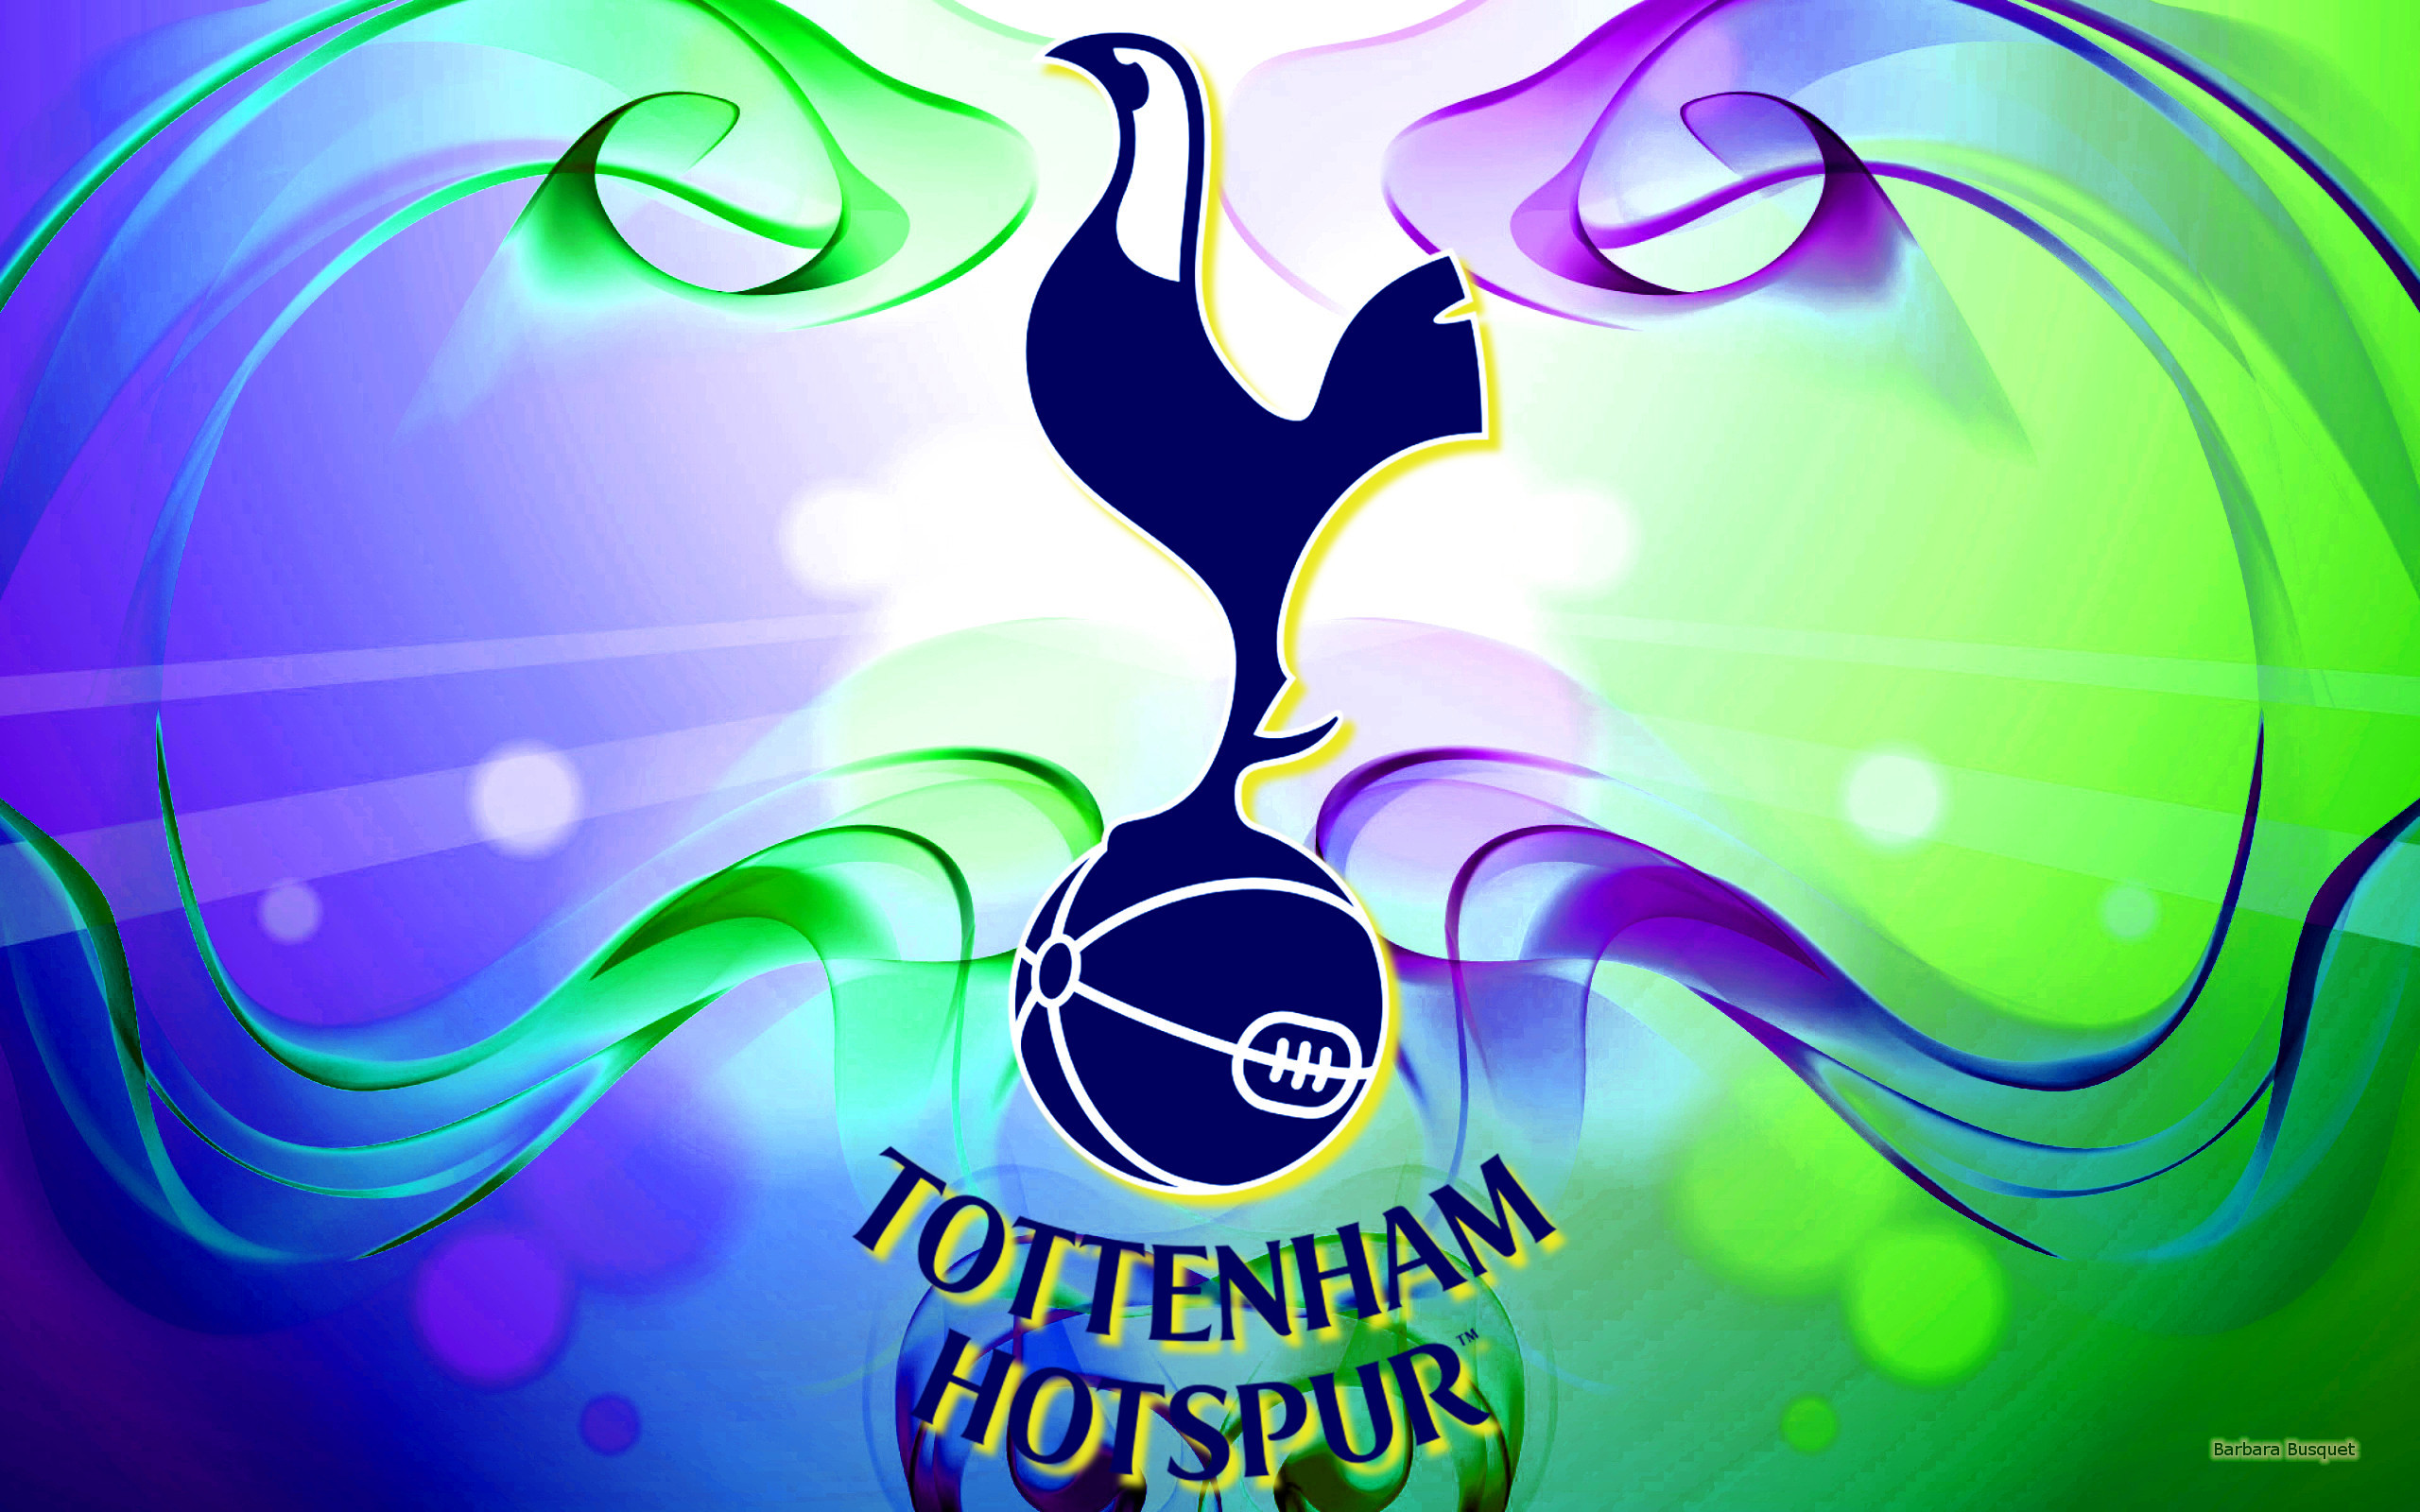 Blue green Tottenham Hotspur wallpaper